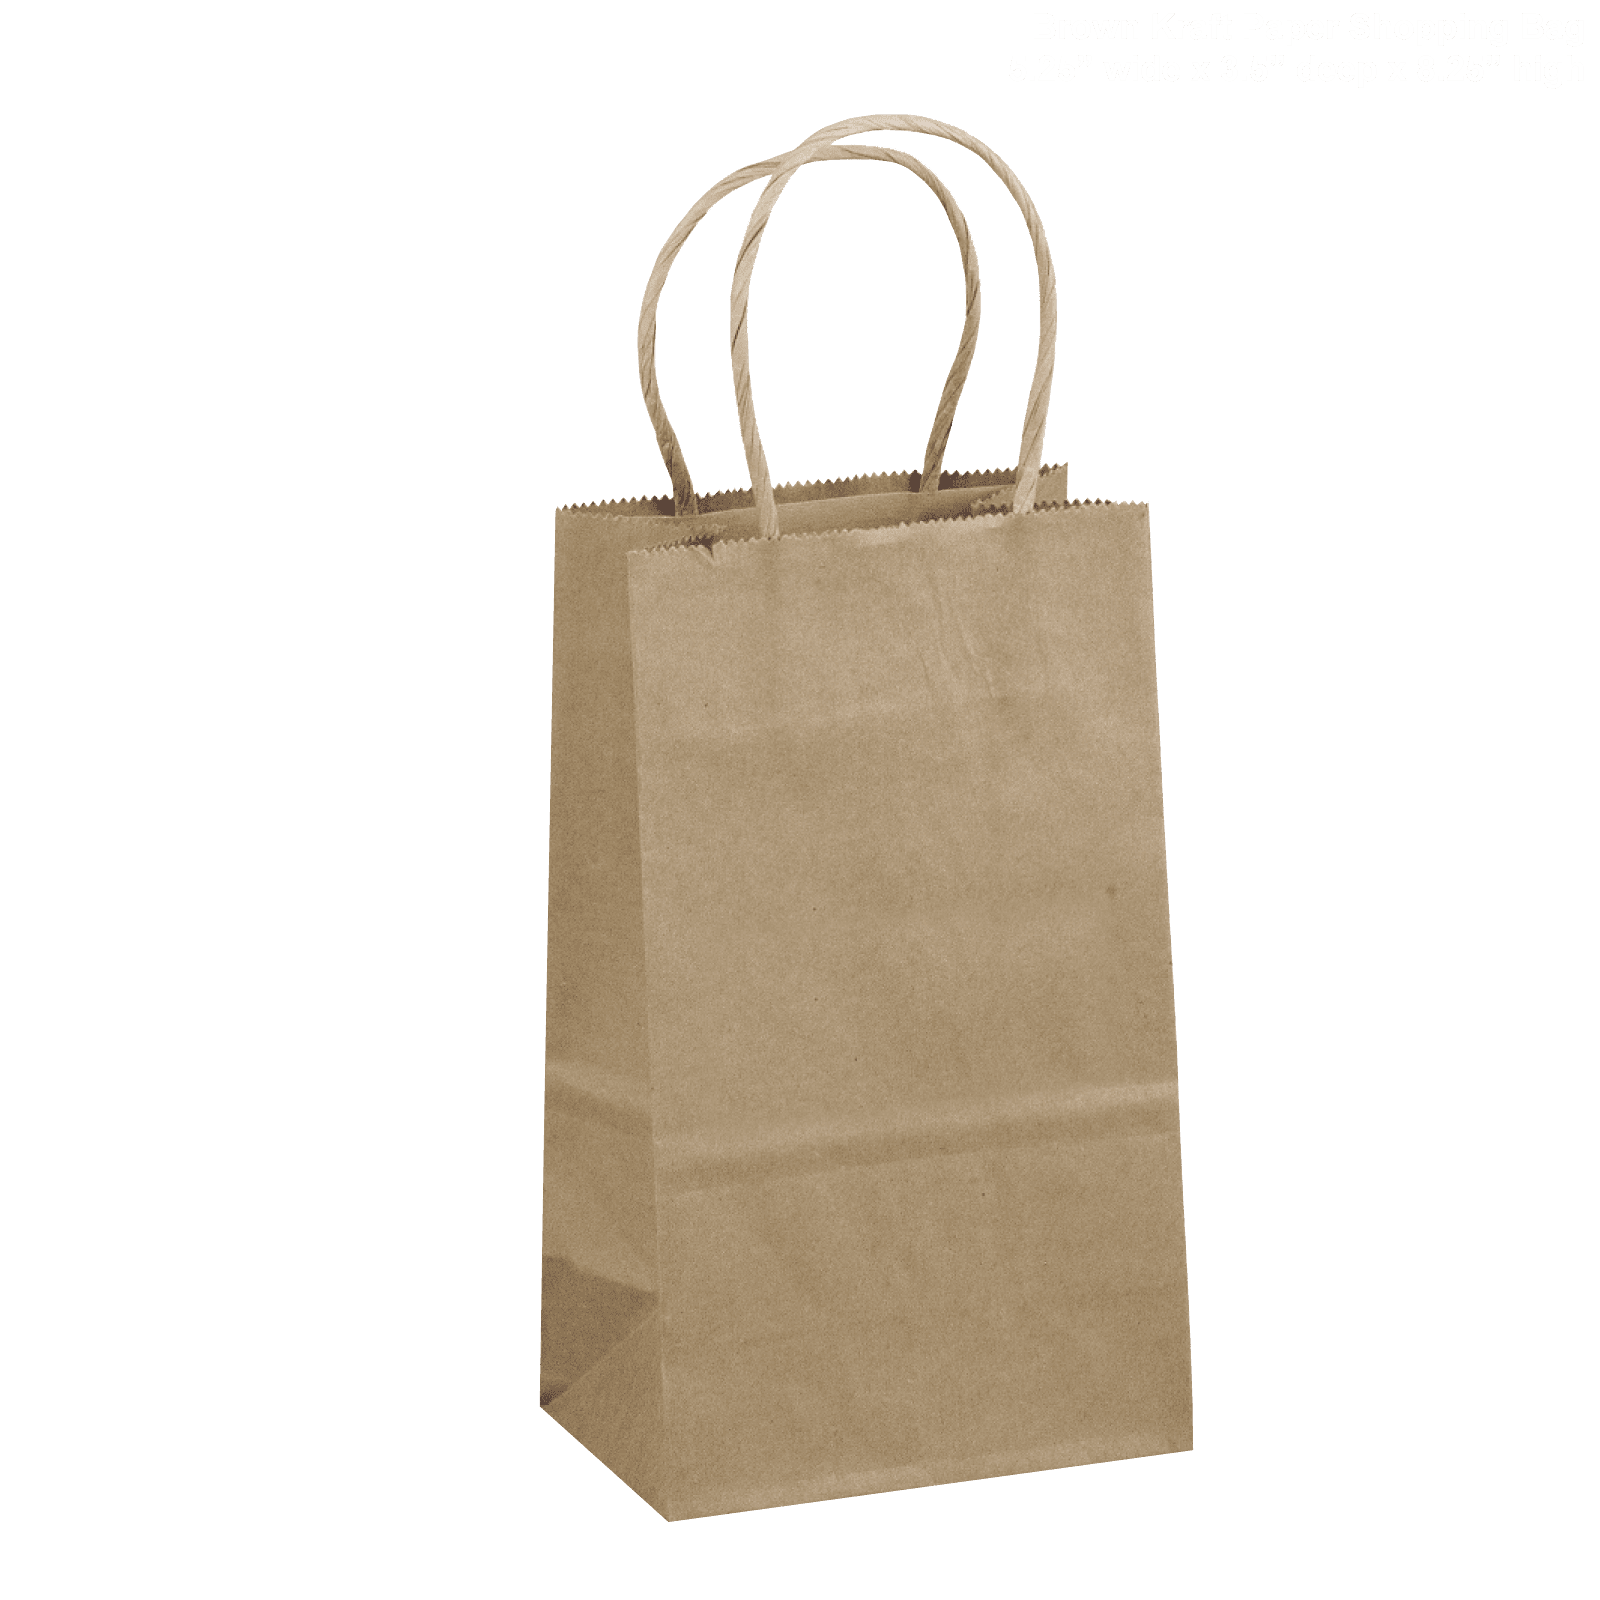 5.25x3.25x8 - 50 Pcs - Bagsource White Kraft Paper Bags, Shopping, Mechandise, Party, Gift Bags